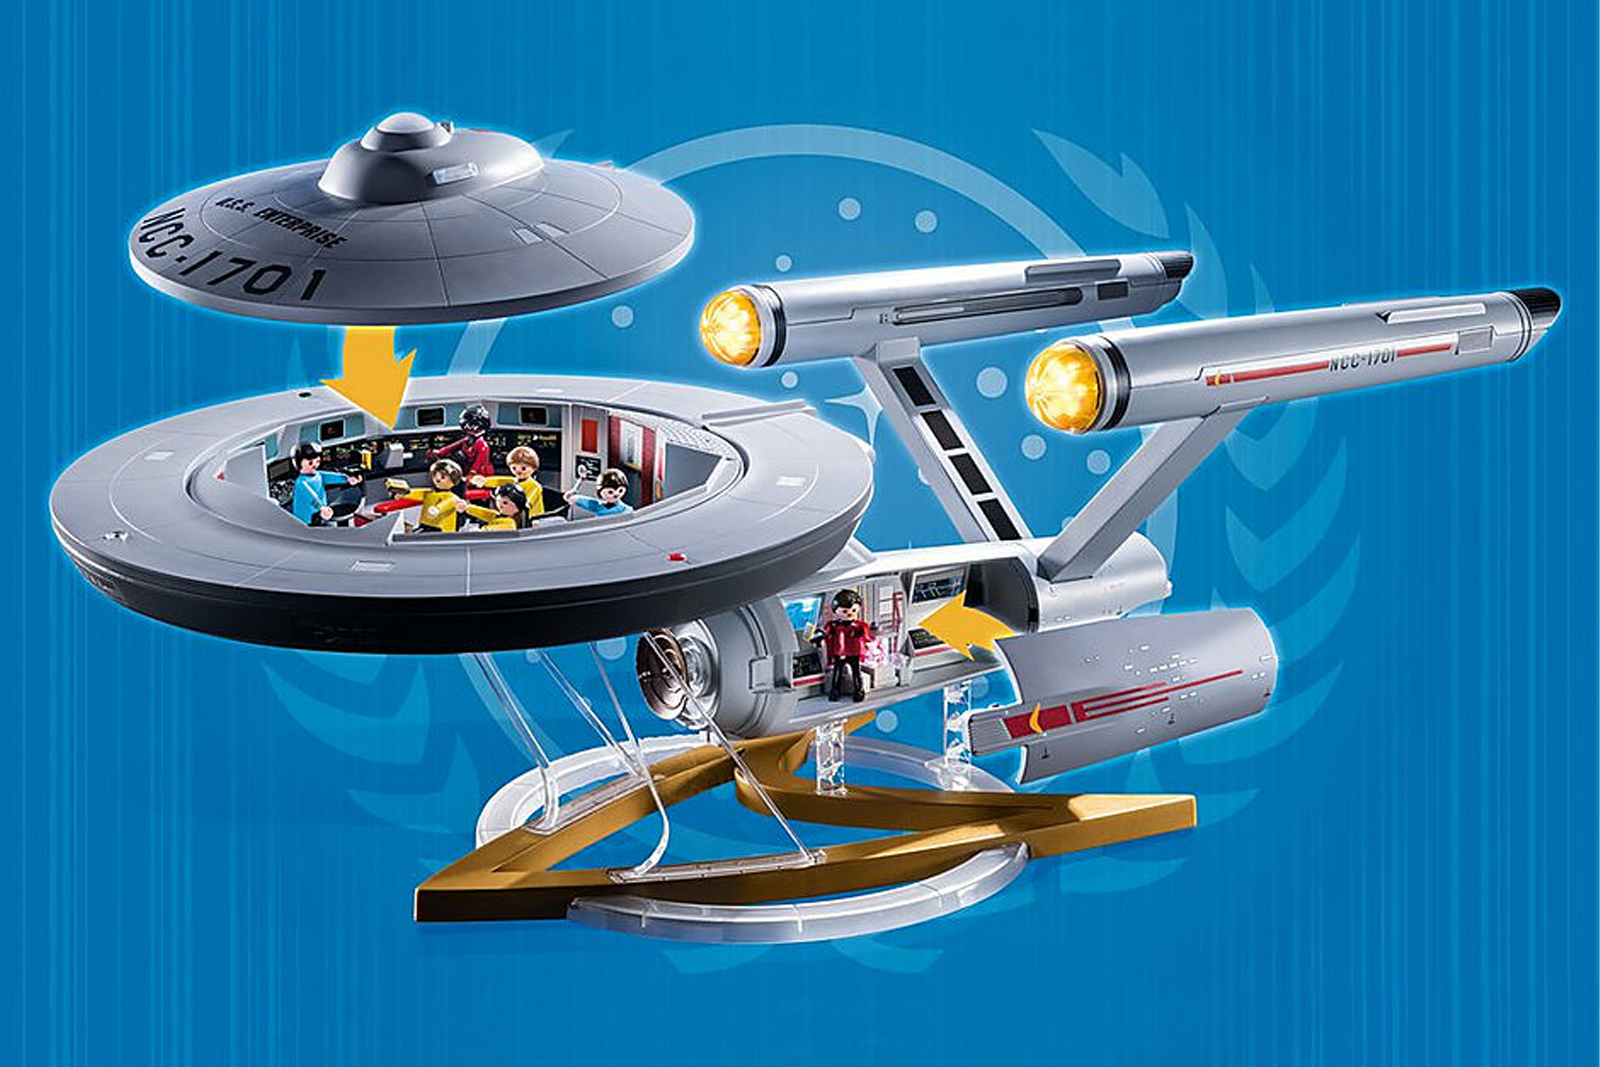 Playmobil's new Star Trek set takes us back to the original TV show photo 2